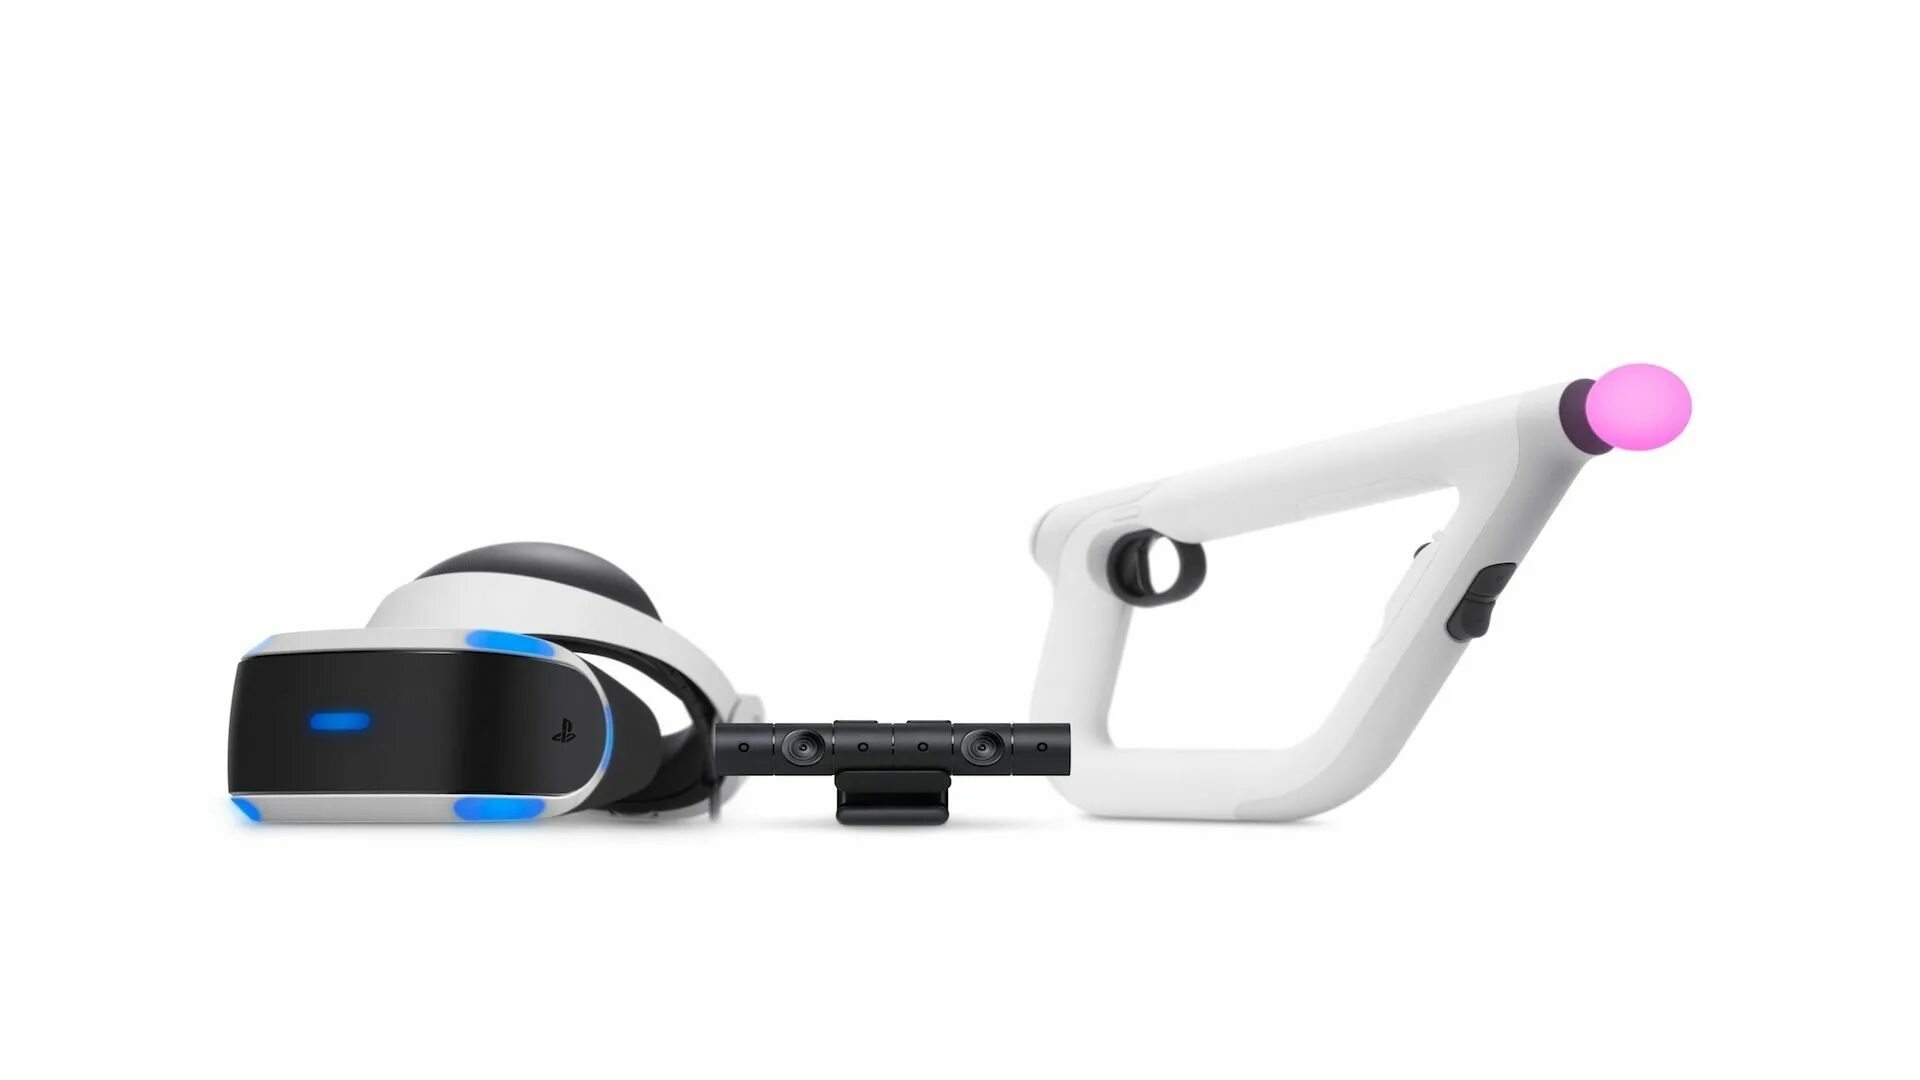 Очки реальности ps4. Sony PLAYSTATION VR aim Controller. Aim Controller ps4 VR. VR шлем для ps4 с контроллерами. PS VR aim Controller для ps5.